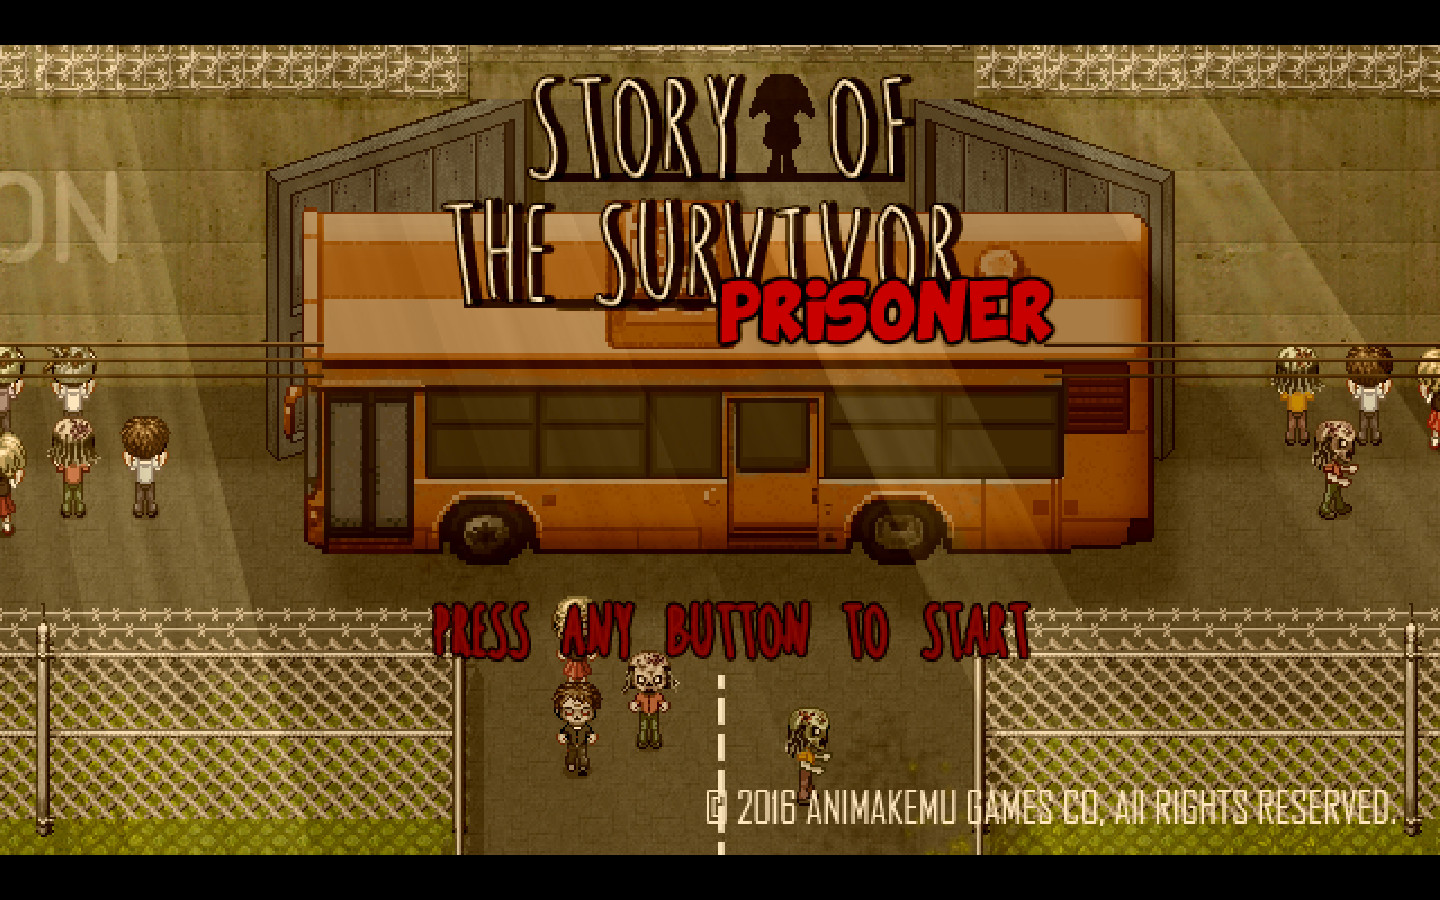 Story of the Survivor: Prisoner Steam CD Key, 0.55$